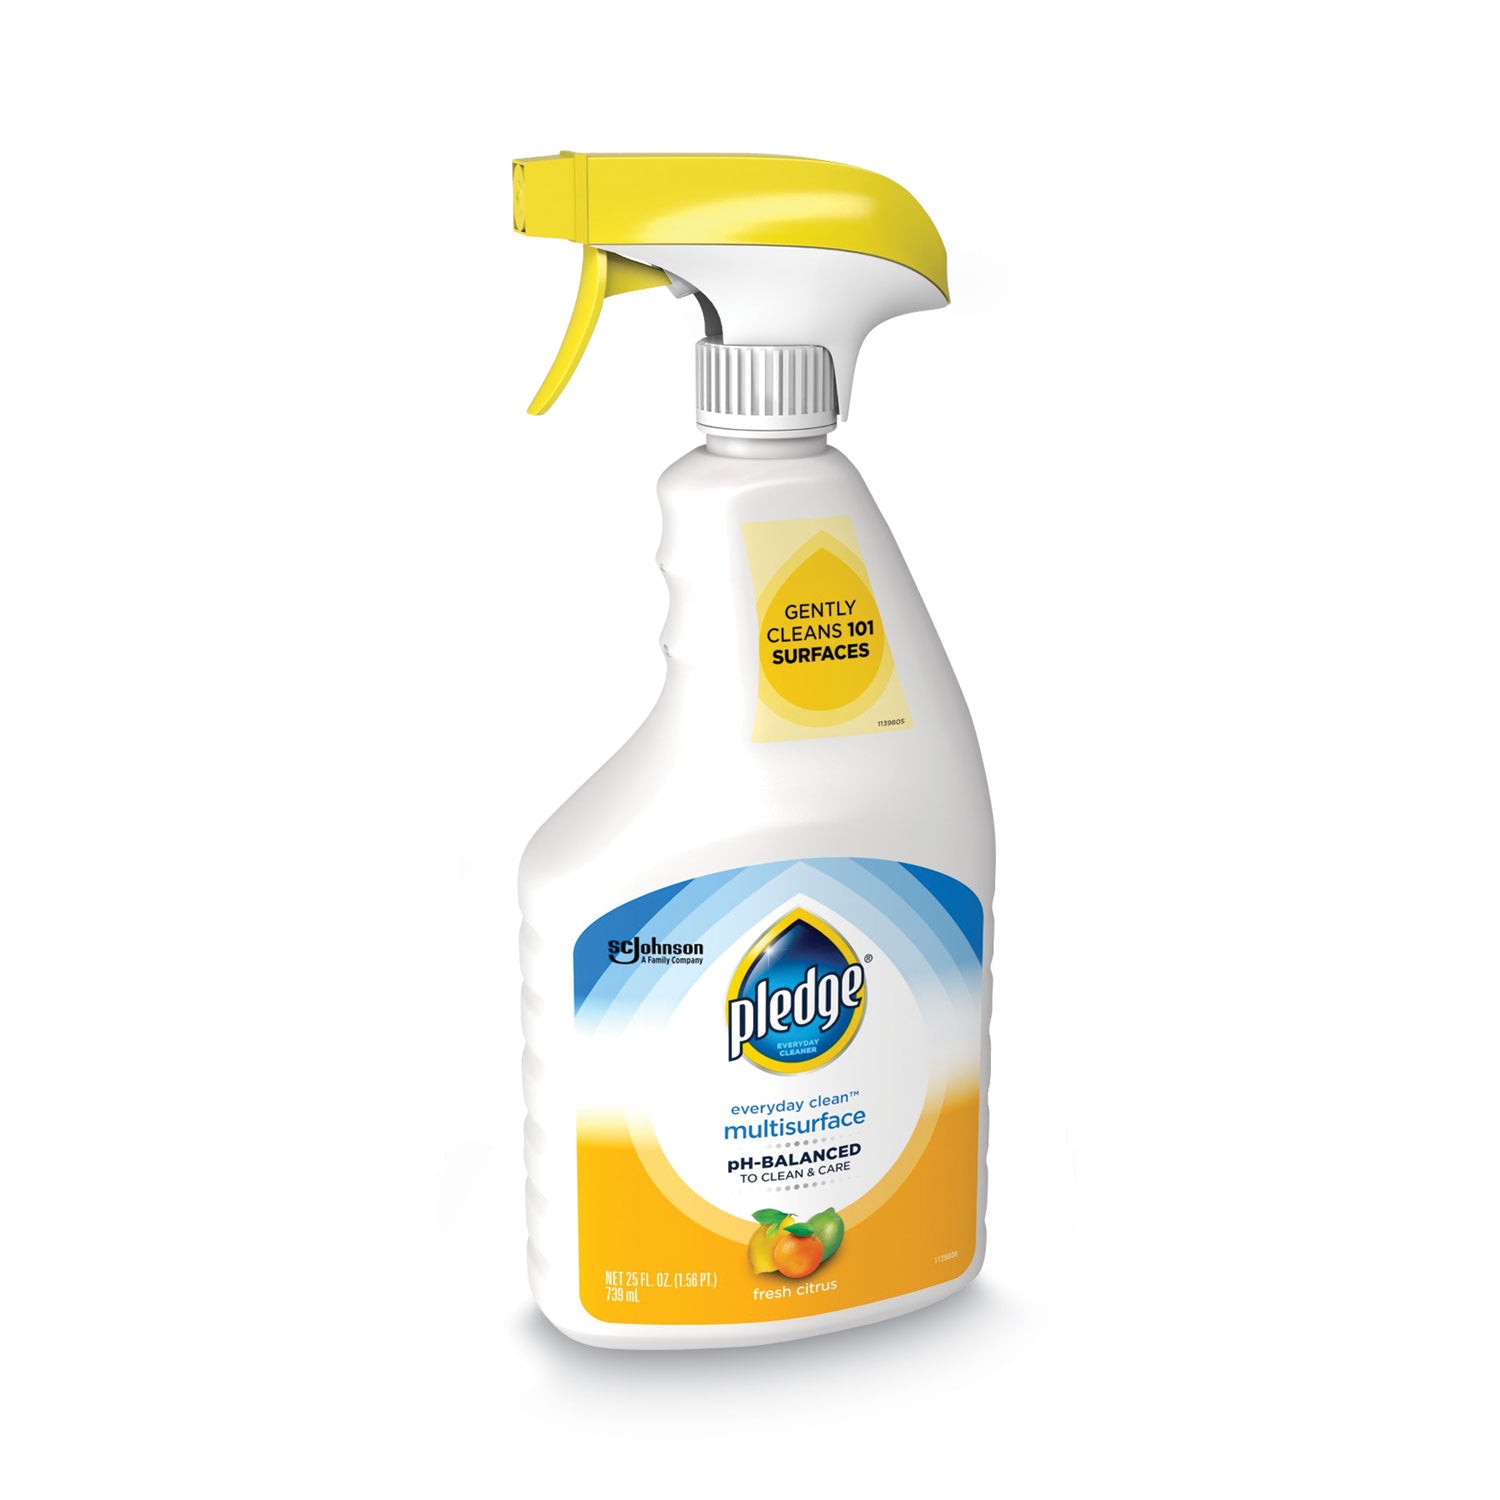 ph-balanced-everyday-clean-multisurface-cleaner-clean-citrus-scent-25-oz-trigger-spray-bottle-6-carton_sjn336283 - 3